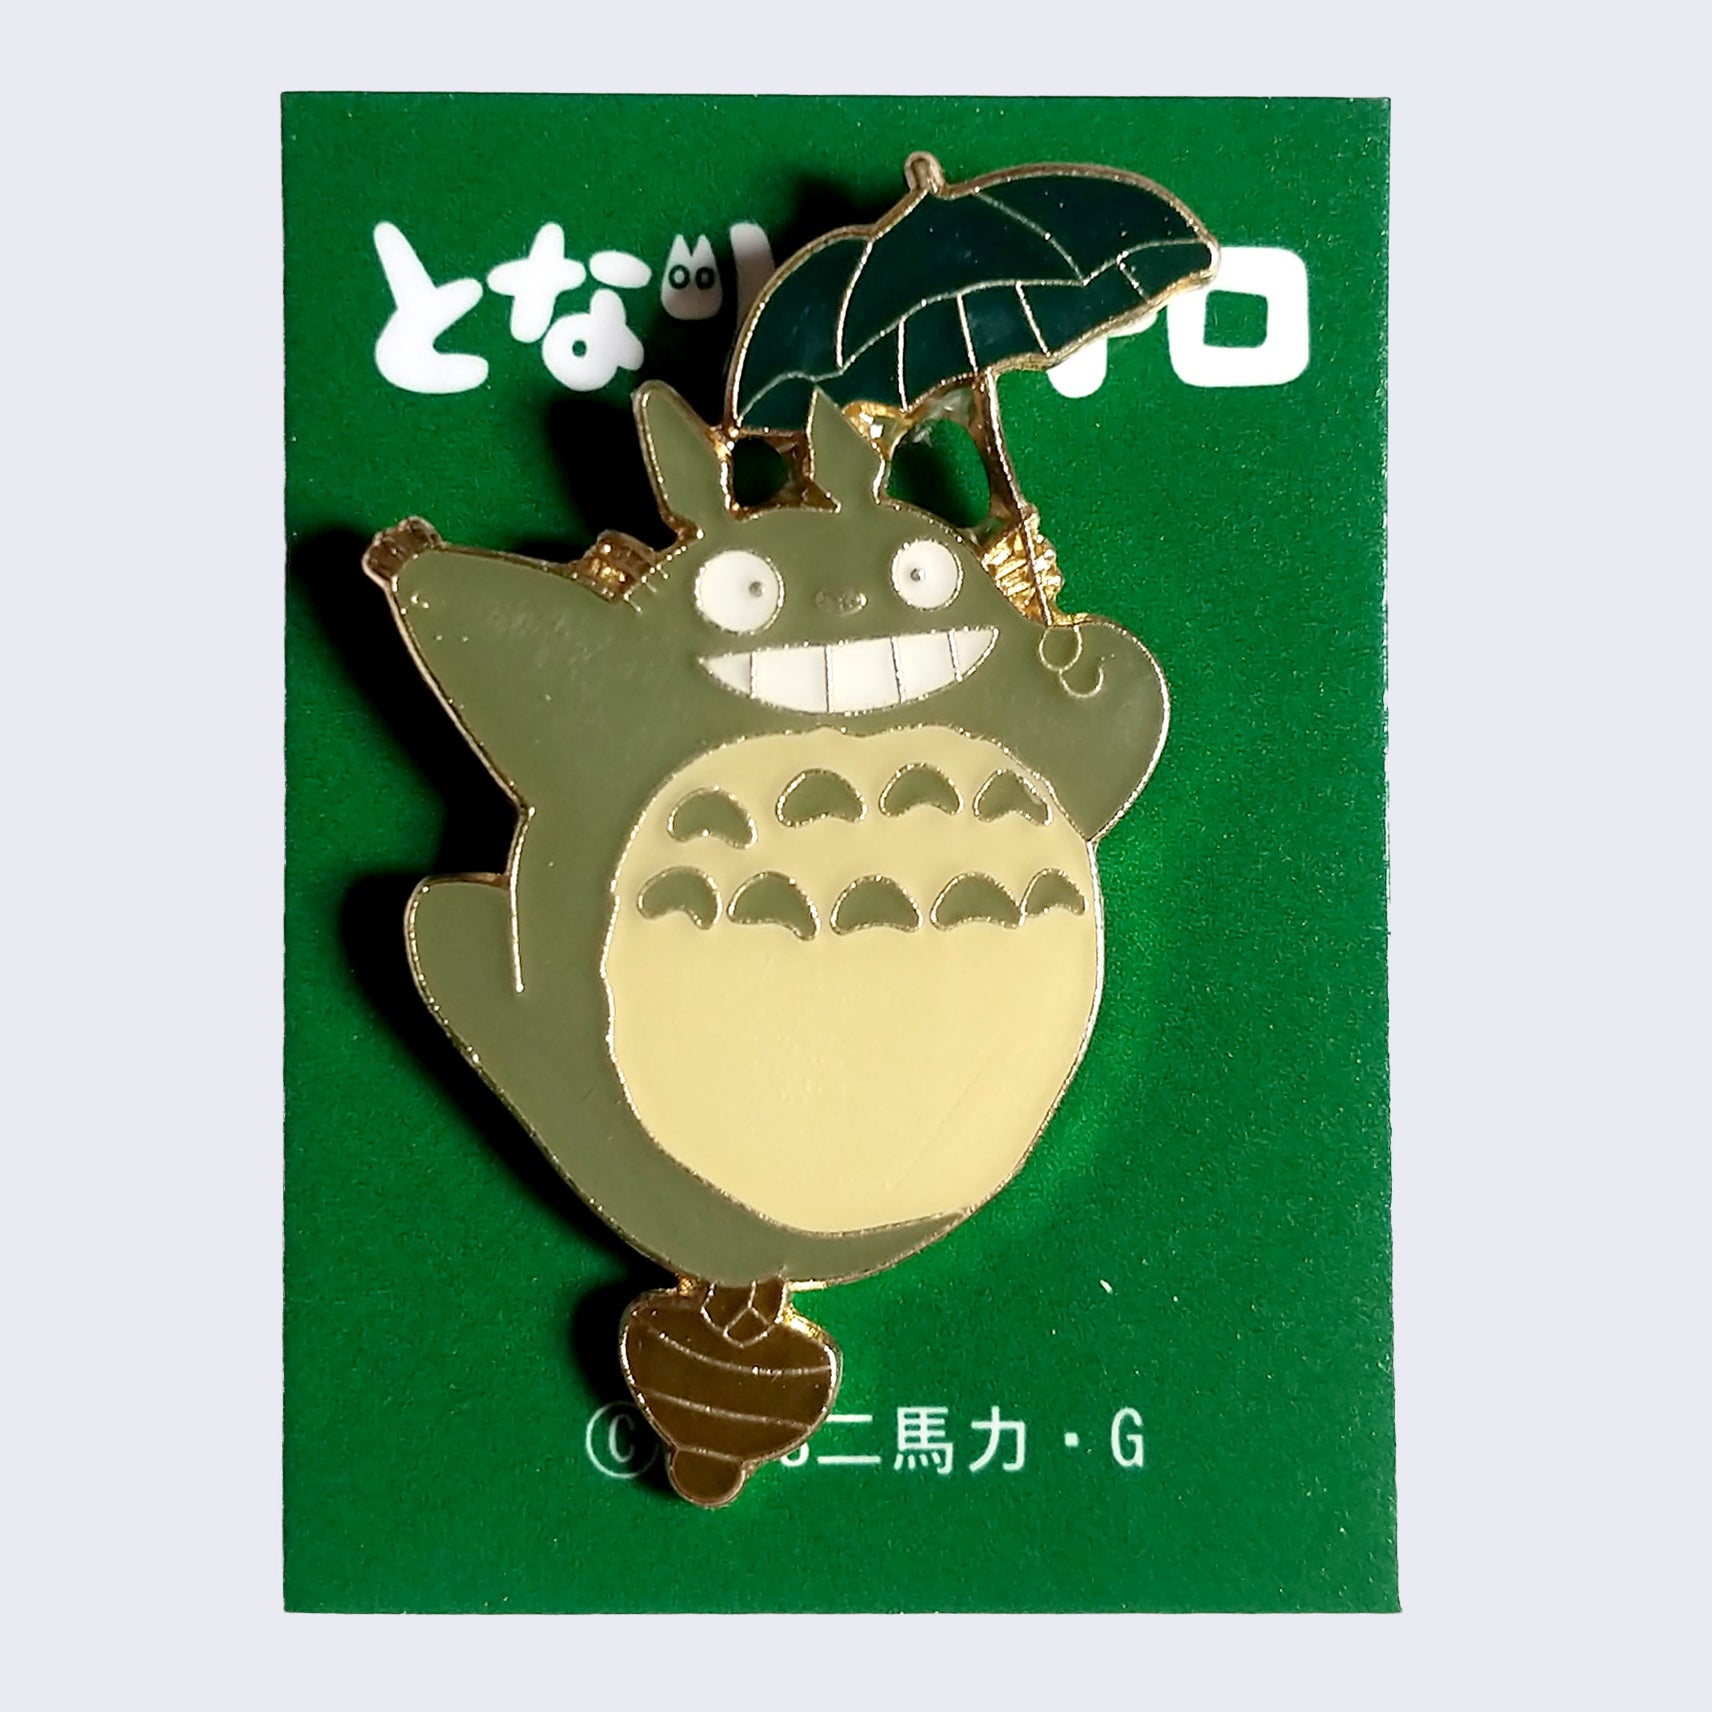 Studio Ghibli Enamel Pin - Totoro Flying Umbrella on an Acorn (Smile)